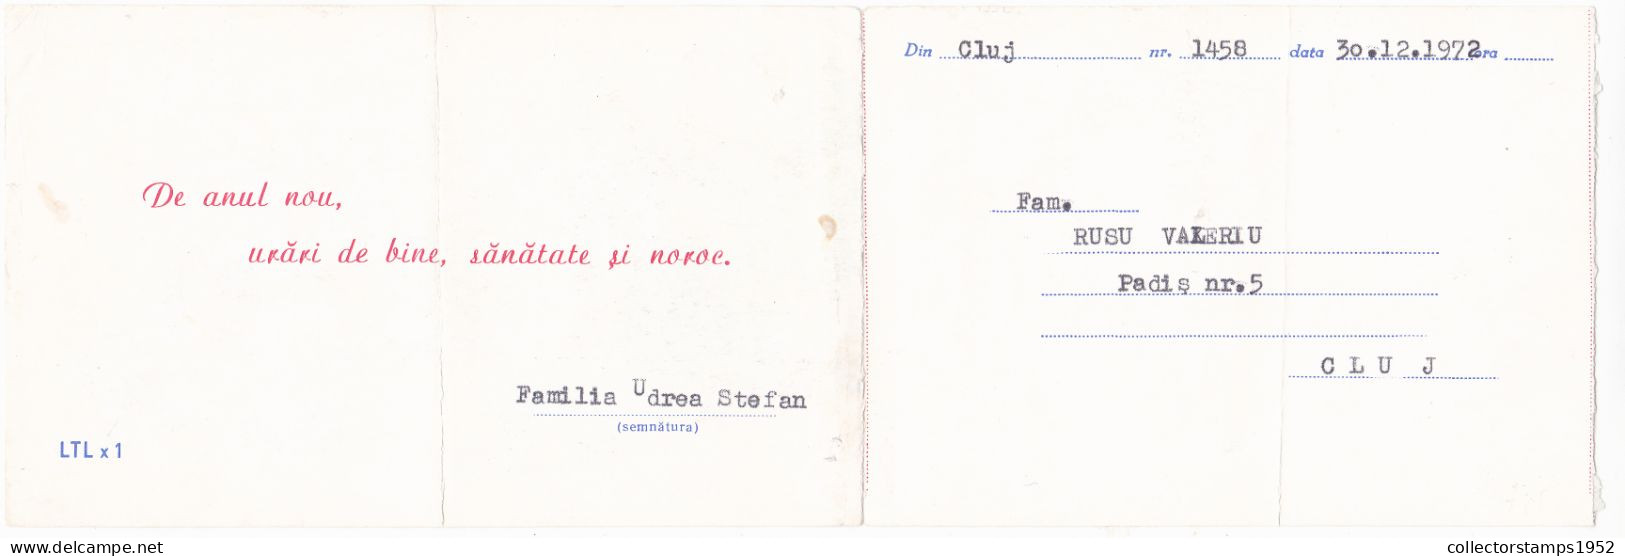 SKIER,TELEGRAM, TELEGRAPH, 1968, ROMANIA,cod.025/66,LTLx1,VERY RARE! - Telegraphenmarken